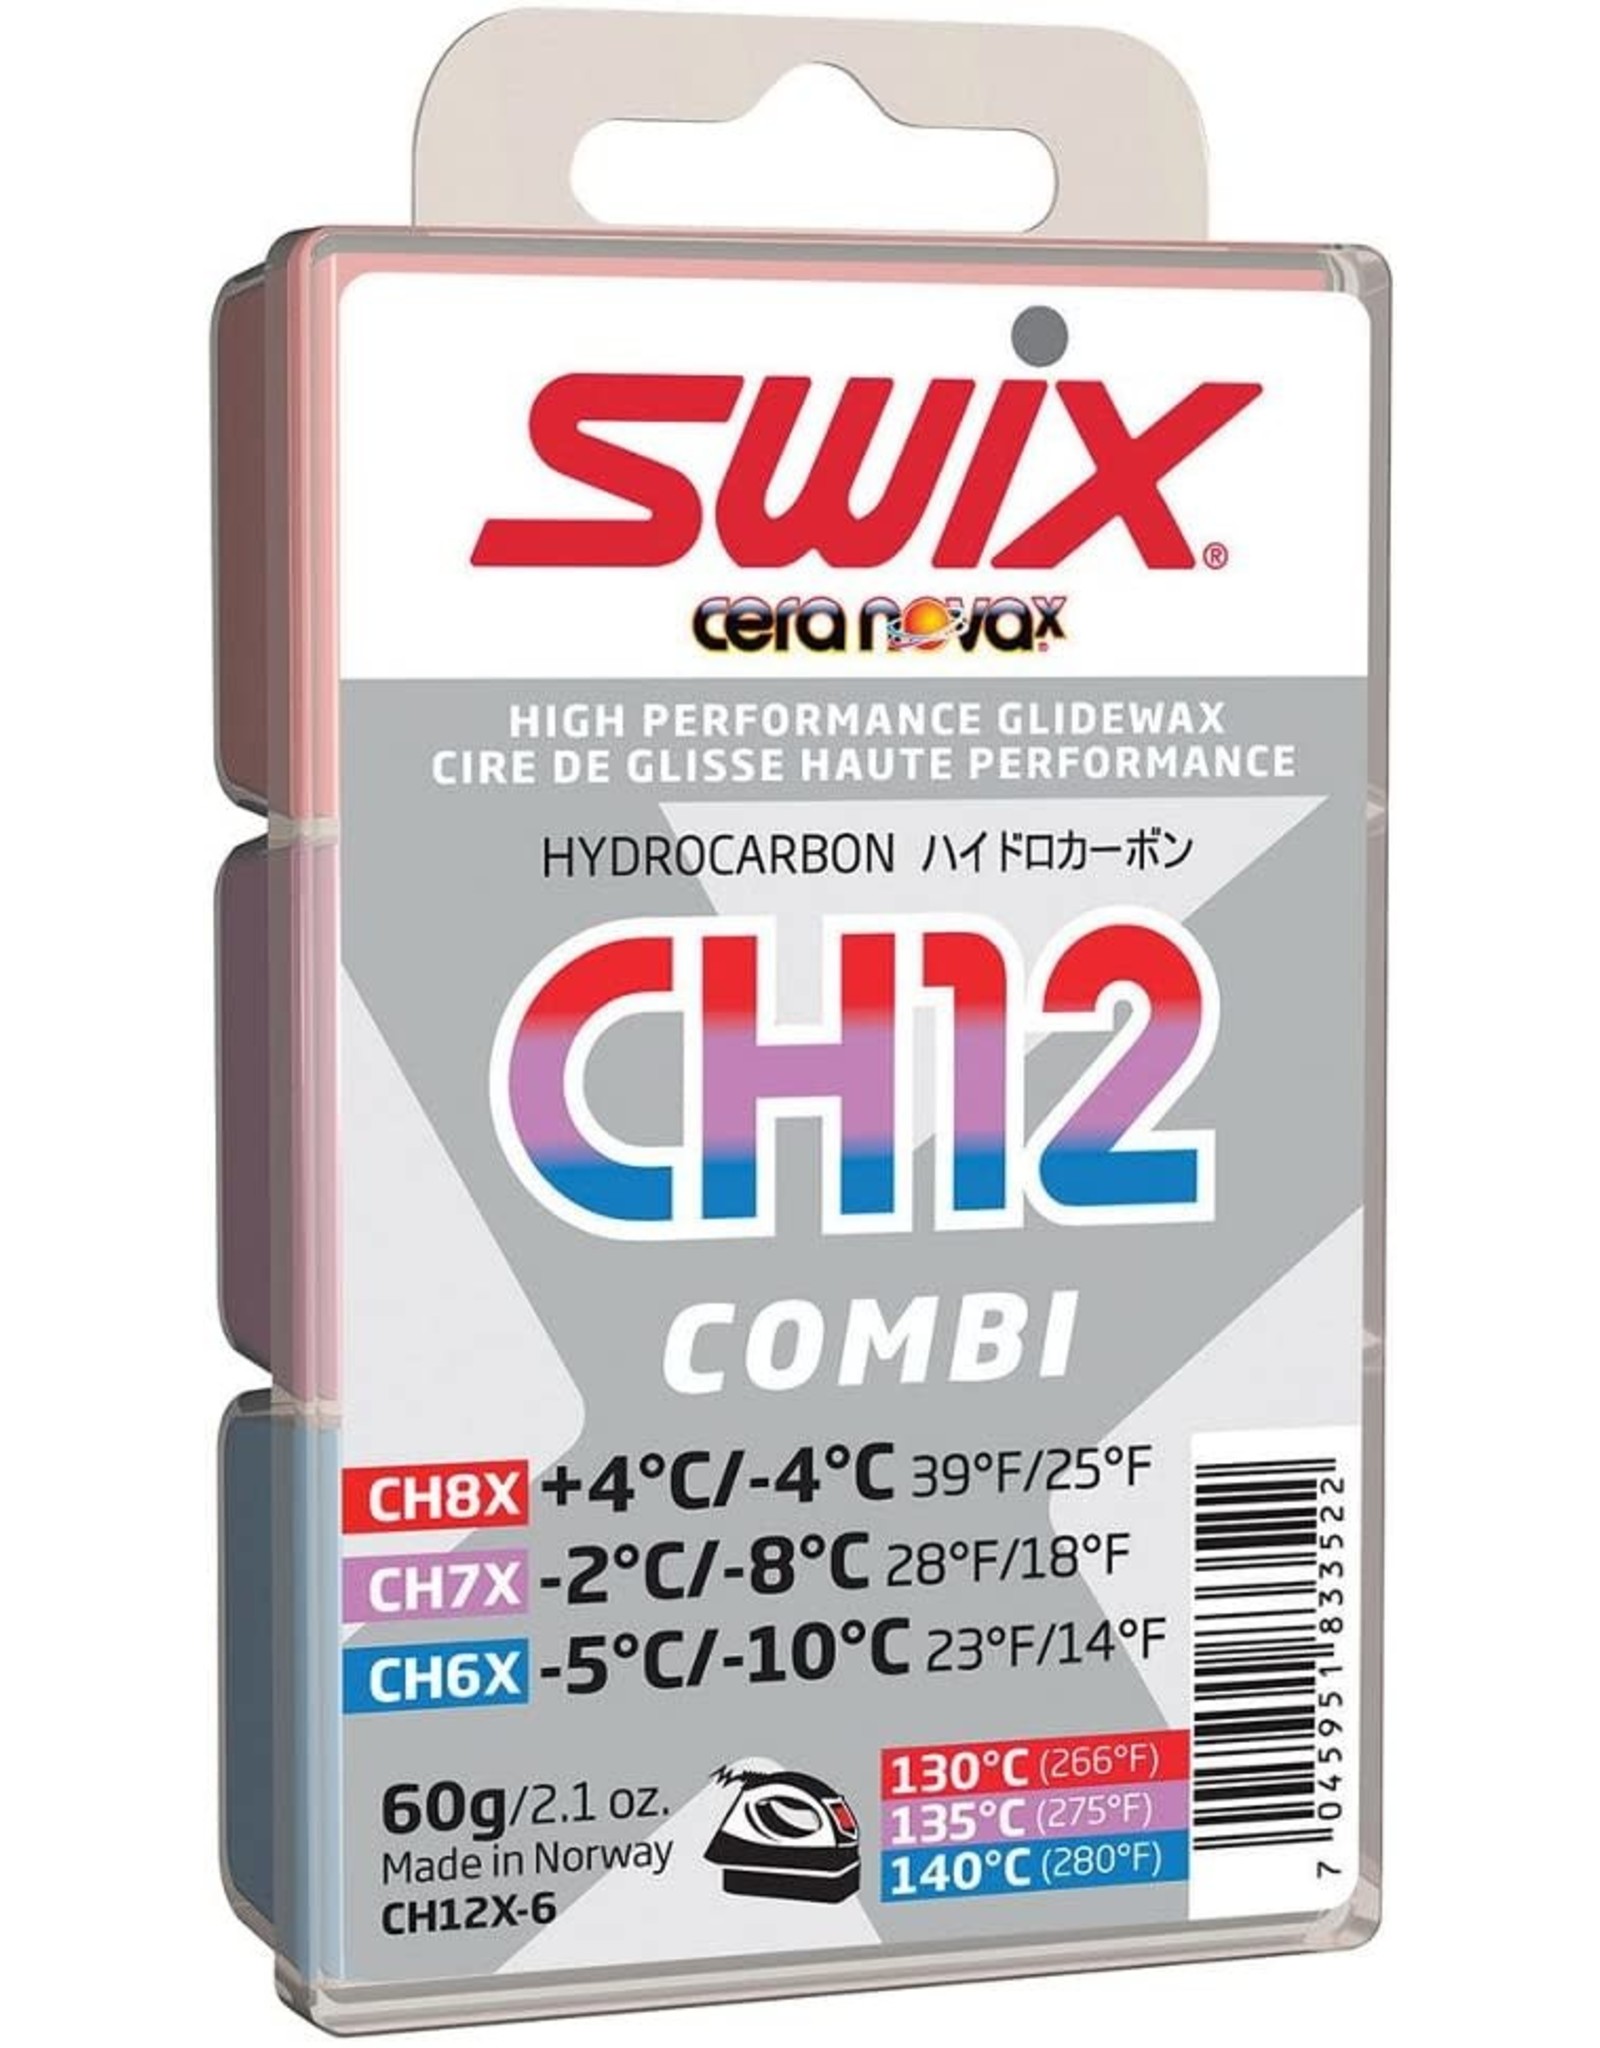 Swix SWIX CH12 COMBI 54g